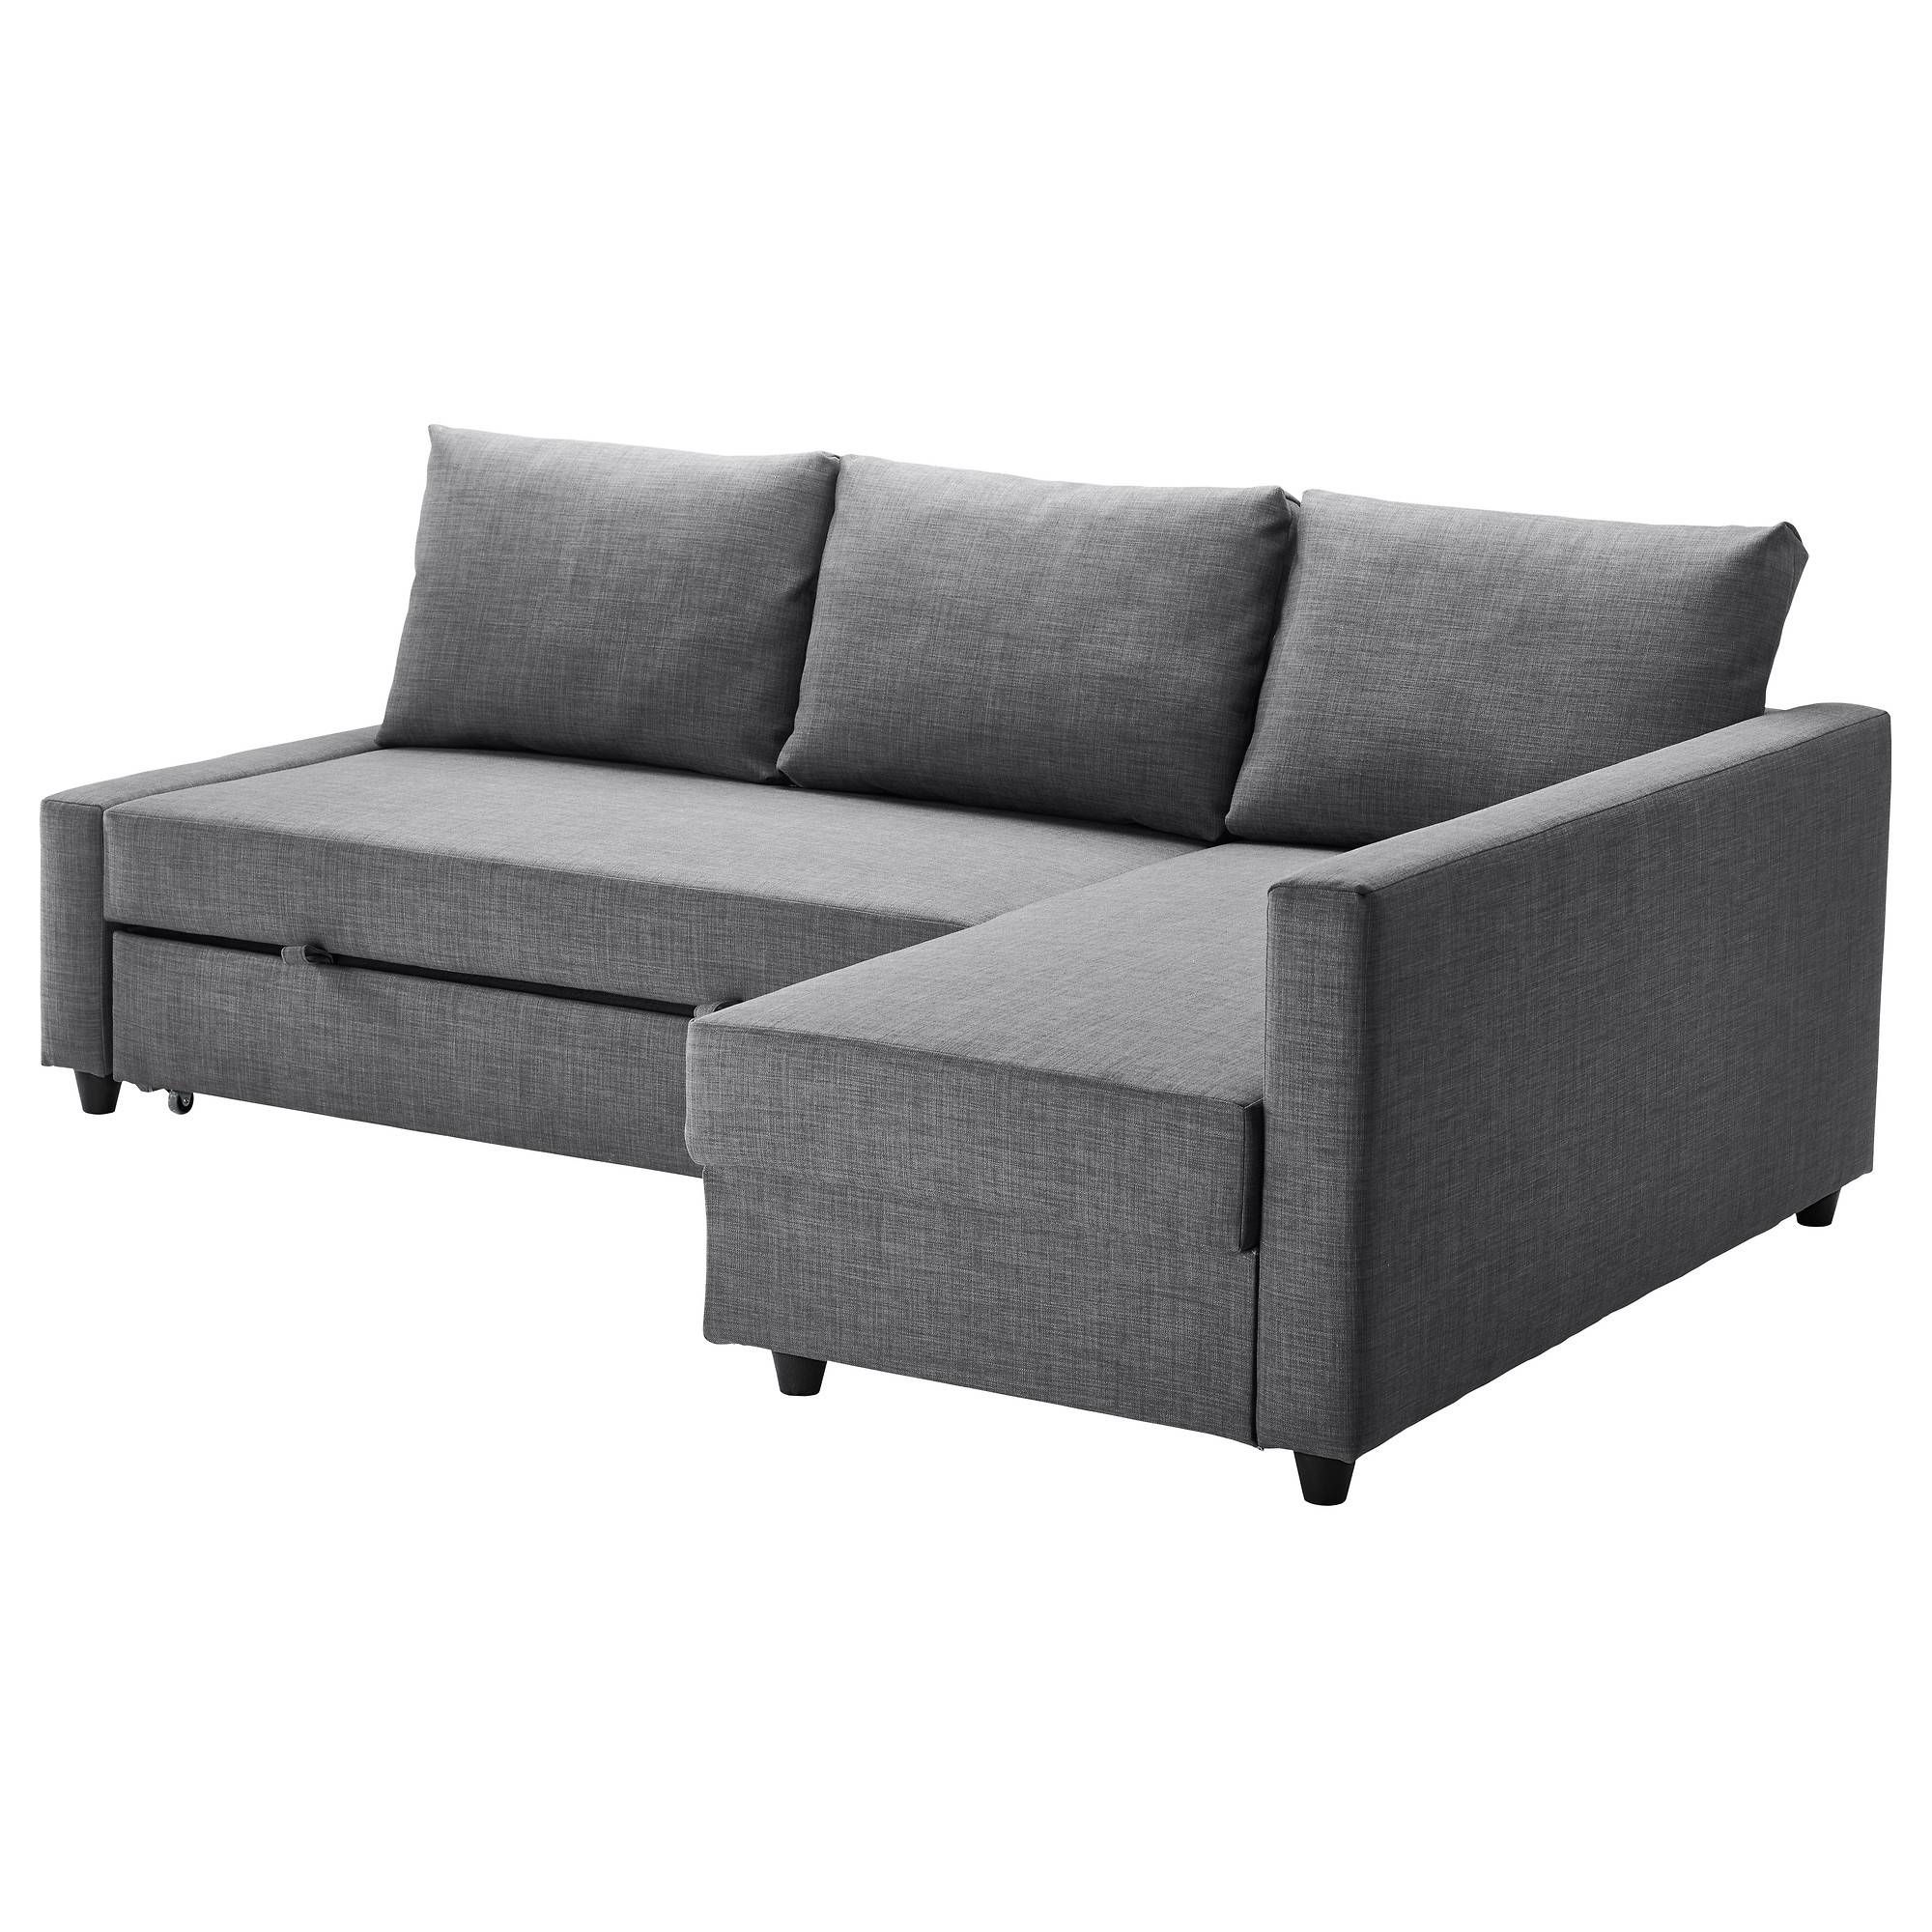 Friheten Corner Sofa Bed With Storage Skiftebo Dark Grey – Ikea With Manstad Sofa Bed Ikea (View 19 of 25)